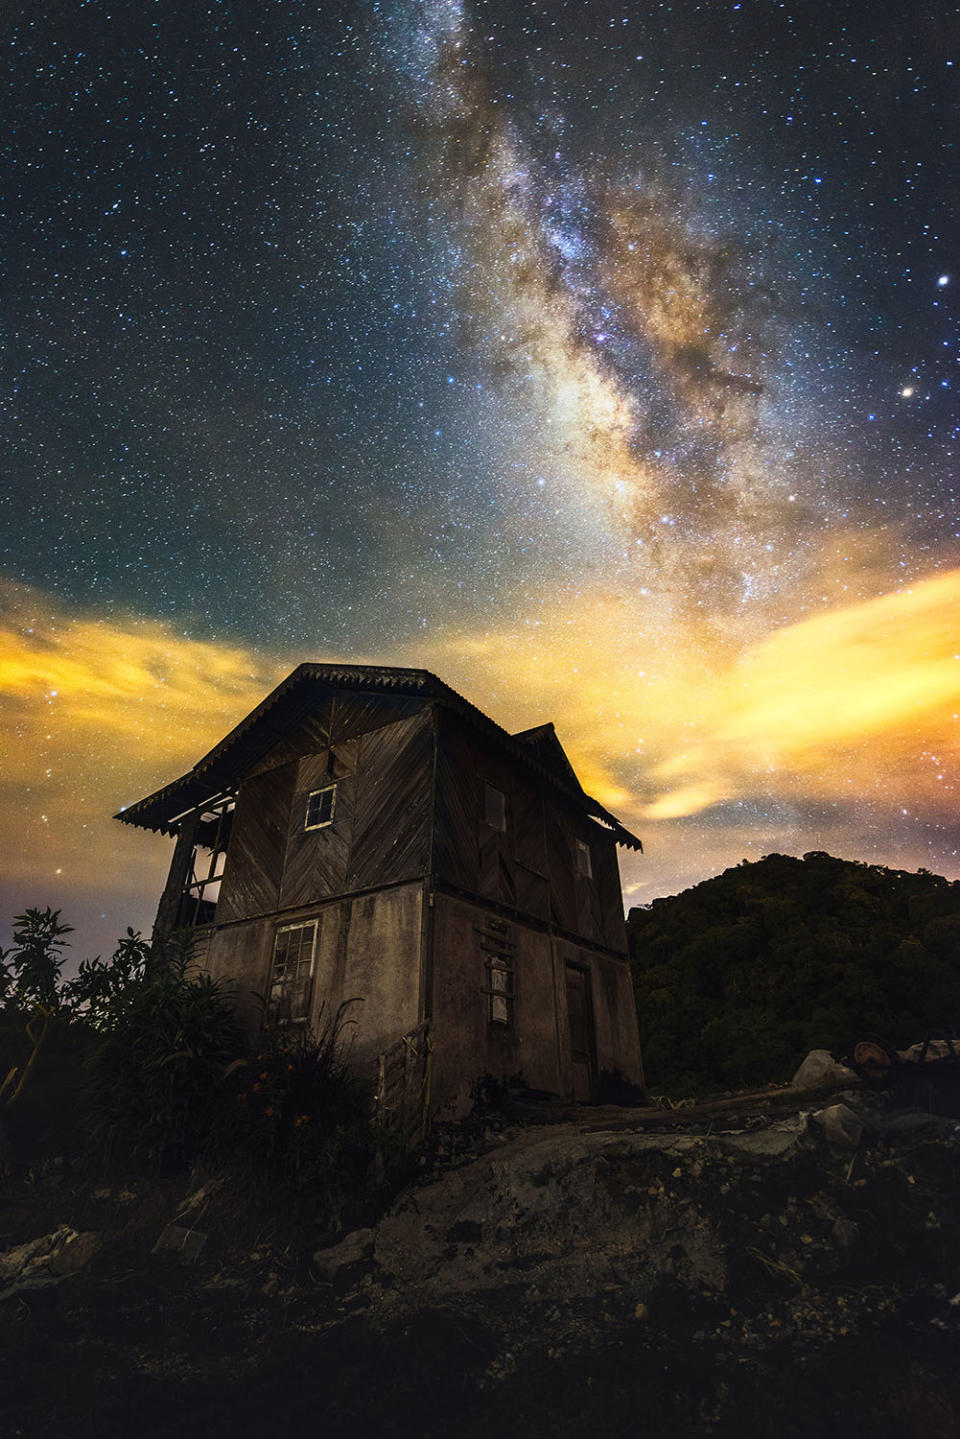 Milky Way nightscapes